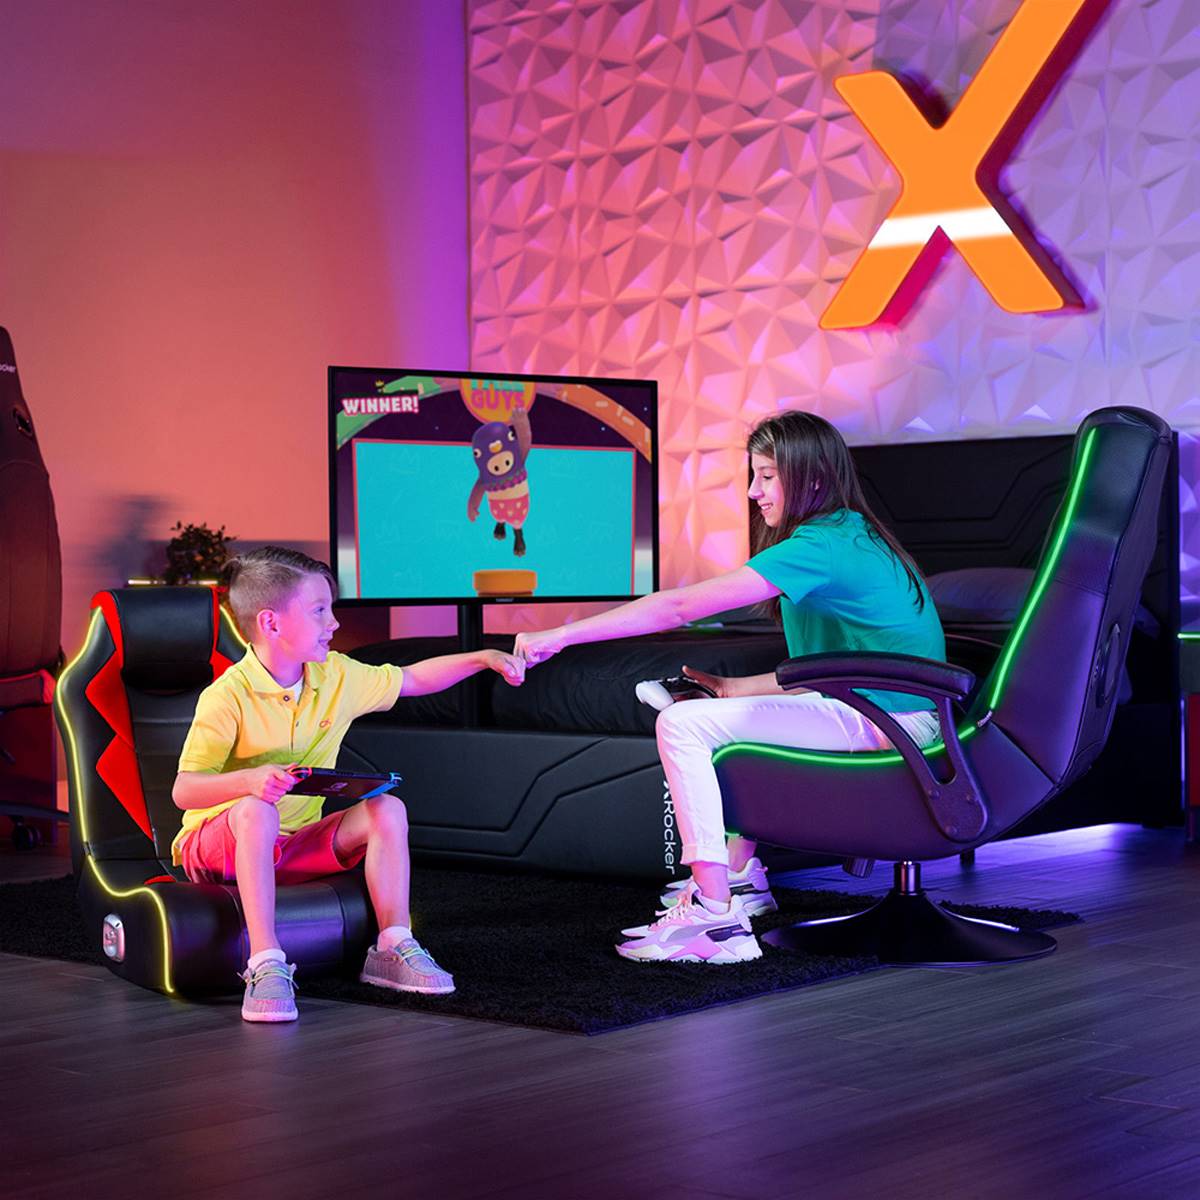 X Rocker Flash LED Audio Floor Rocker Gaming Chair